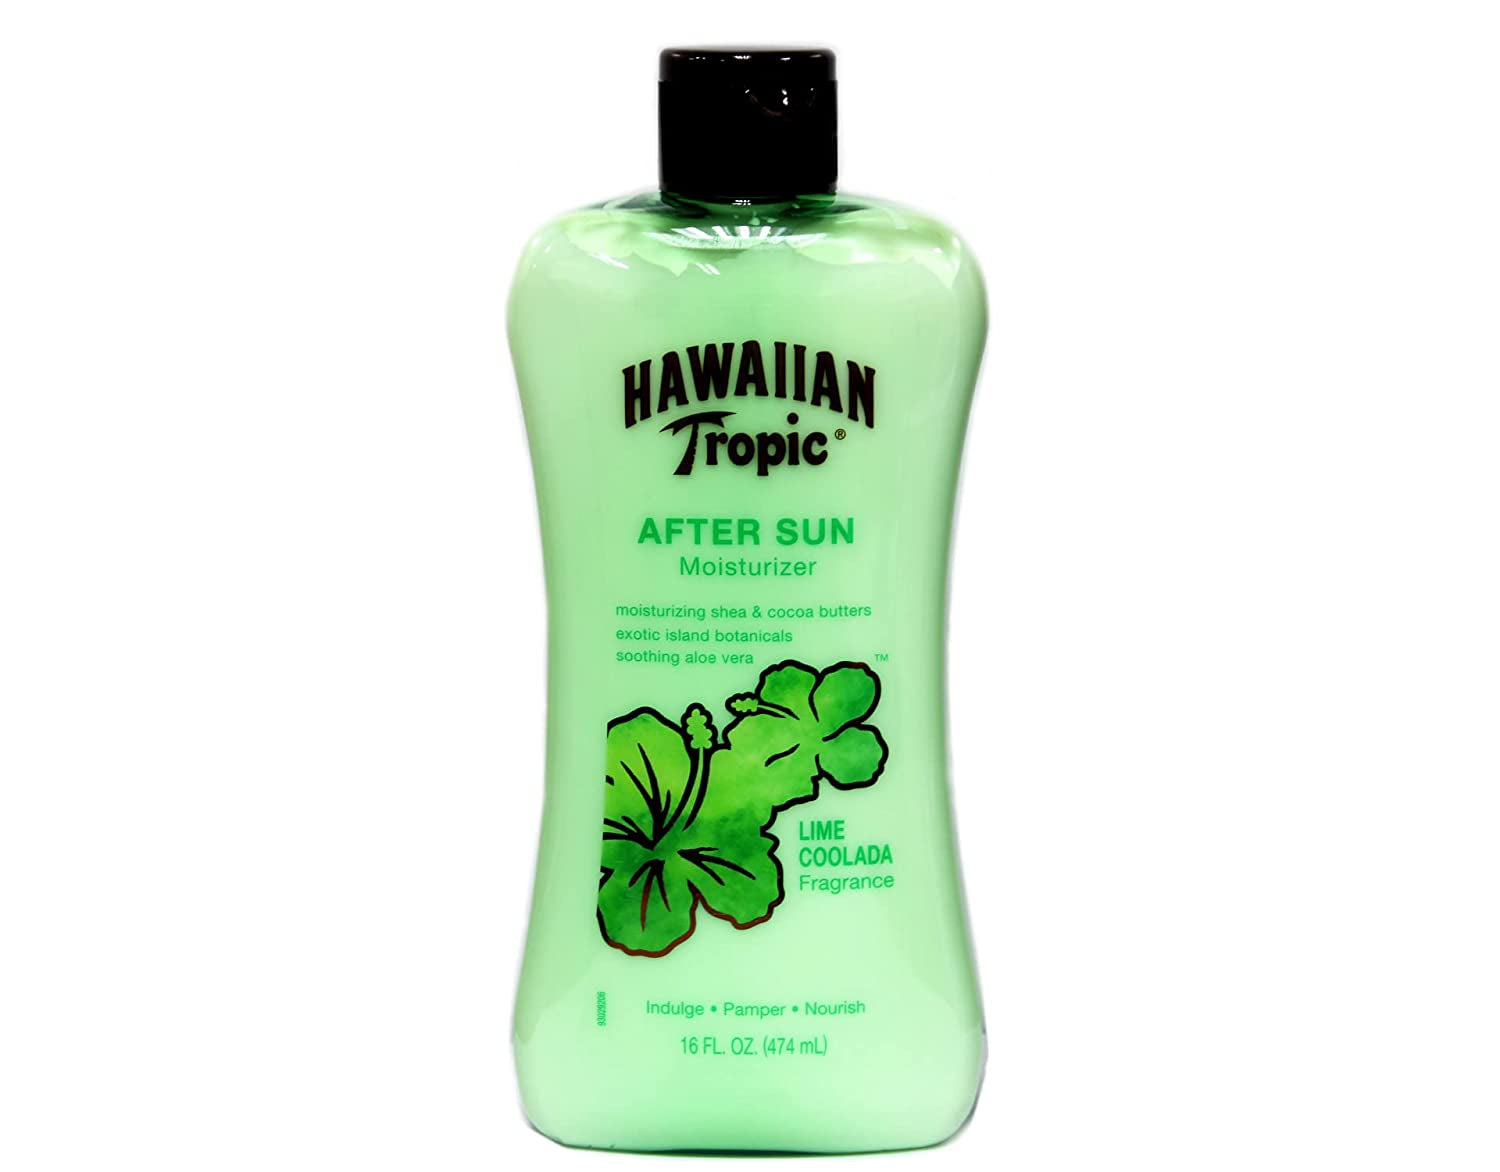 "Refreshing Hawaiian Tropic Lime Coolada After Sun Lotion Twin Pack - 16oz Each"